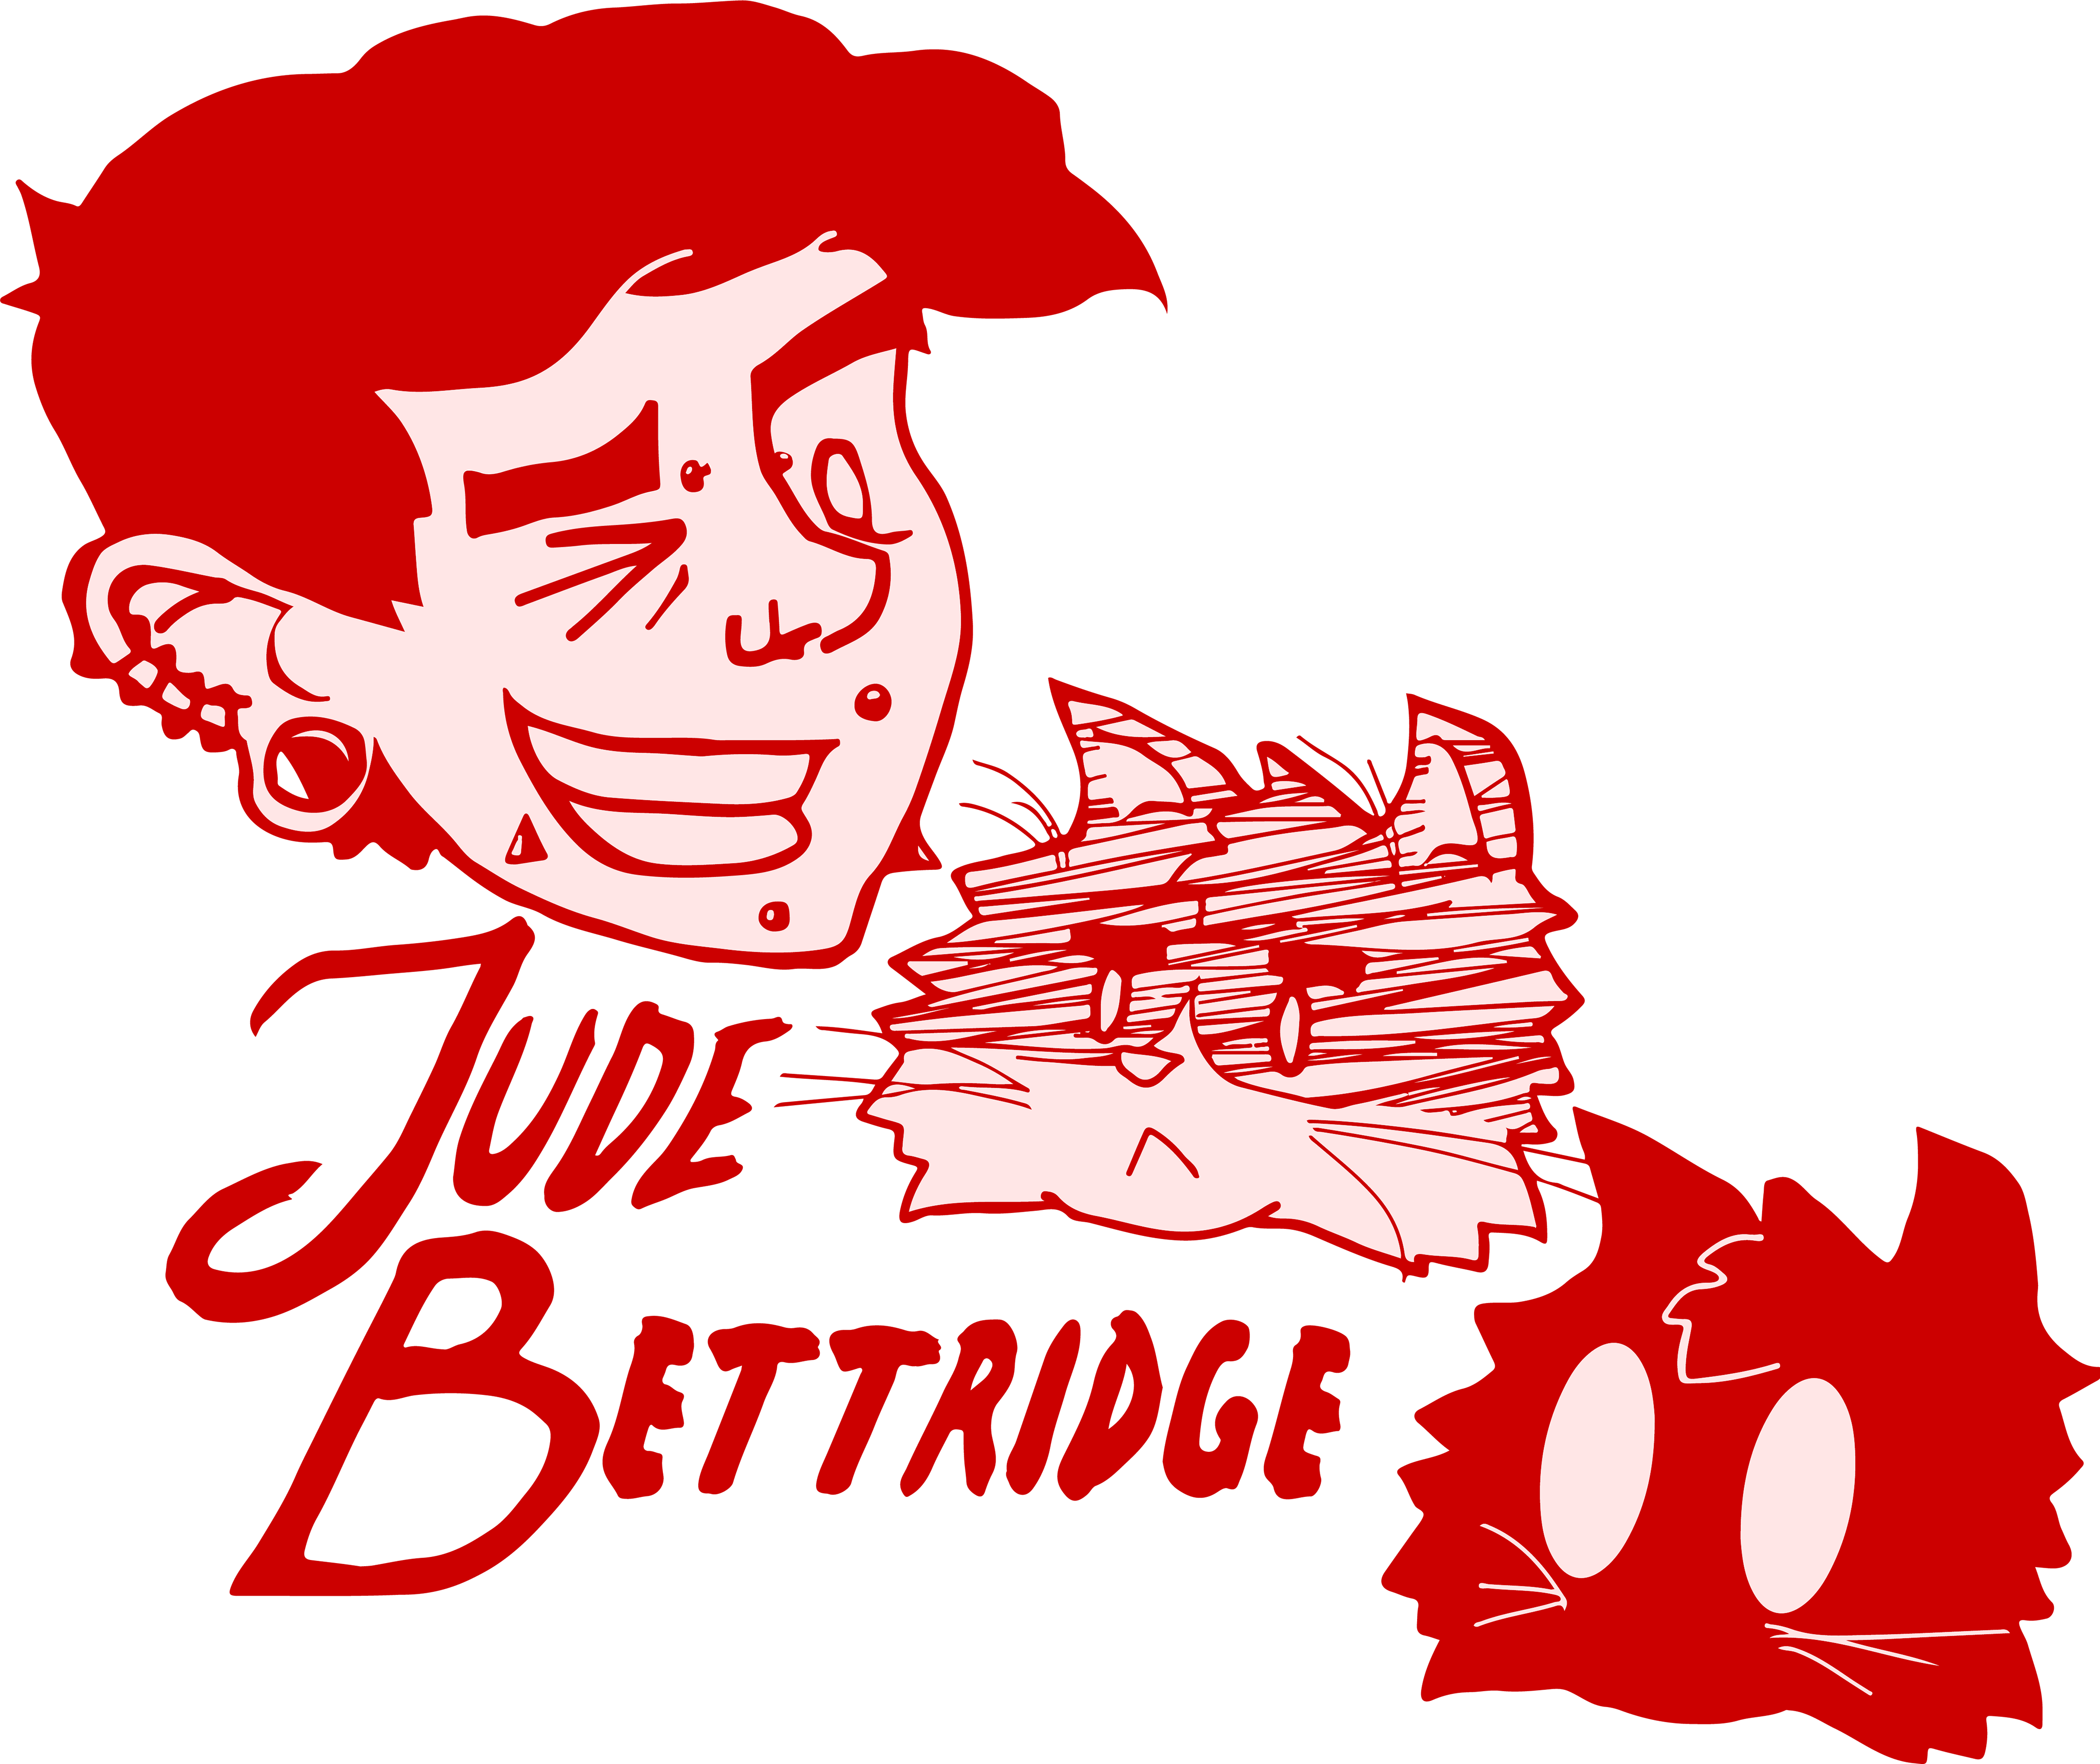 Jude Bettridge